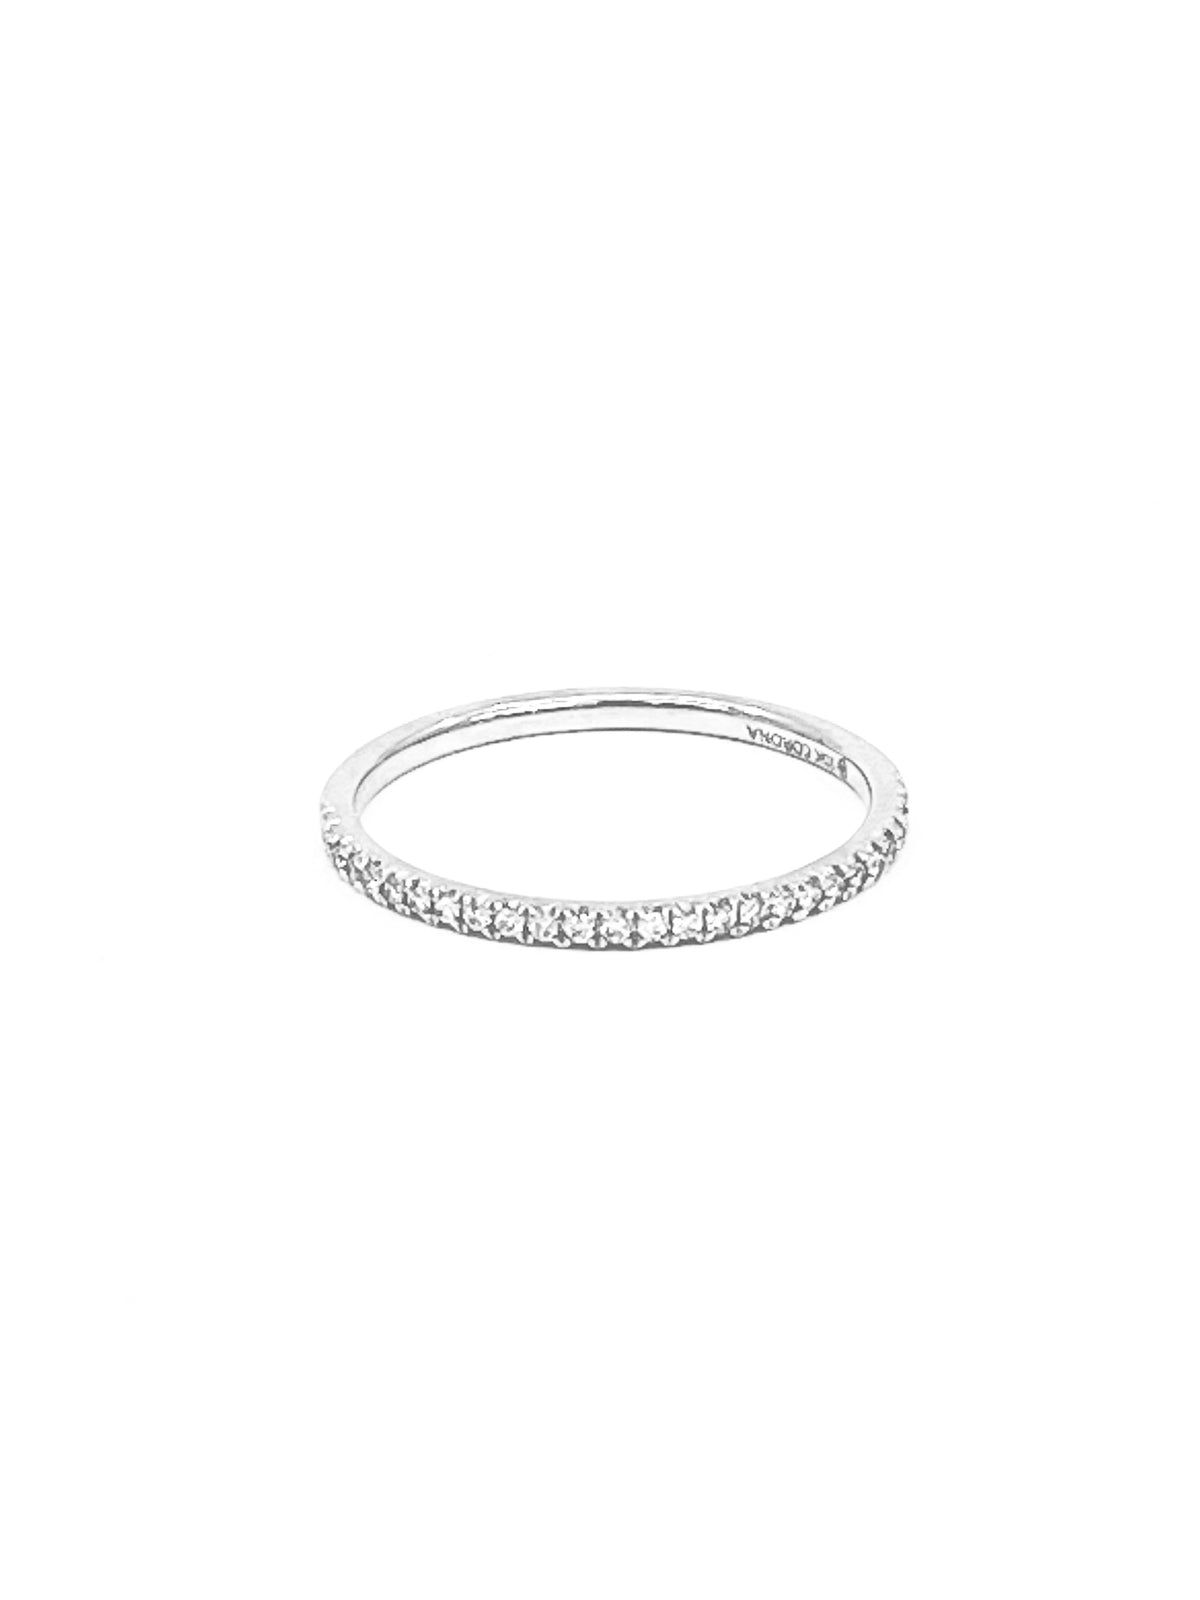 10K White Gold 0.10cttw Diamond Pave Ring, Size 7